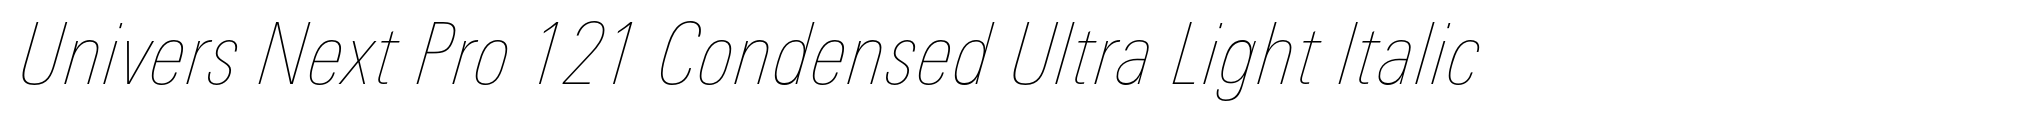 Univers Next Pro 121 Condensed Ultra Light Italic image